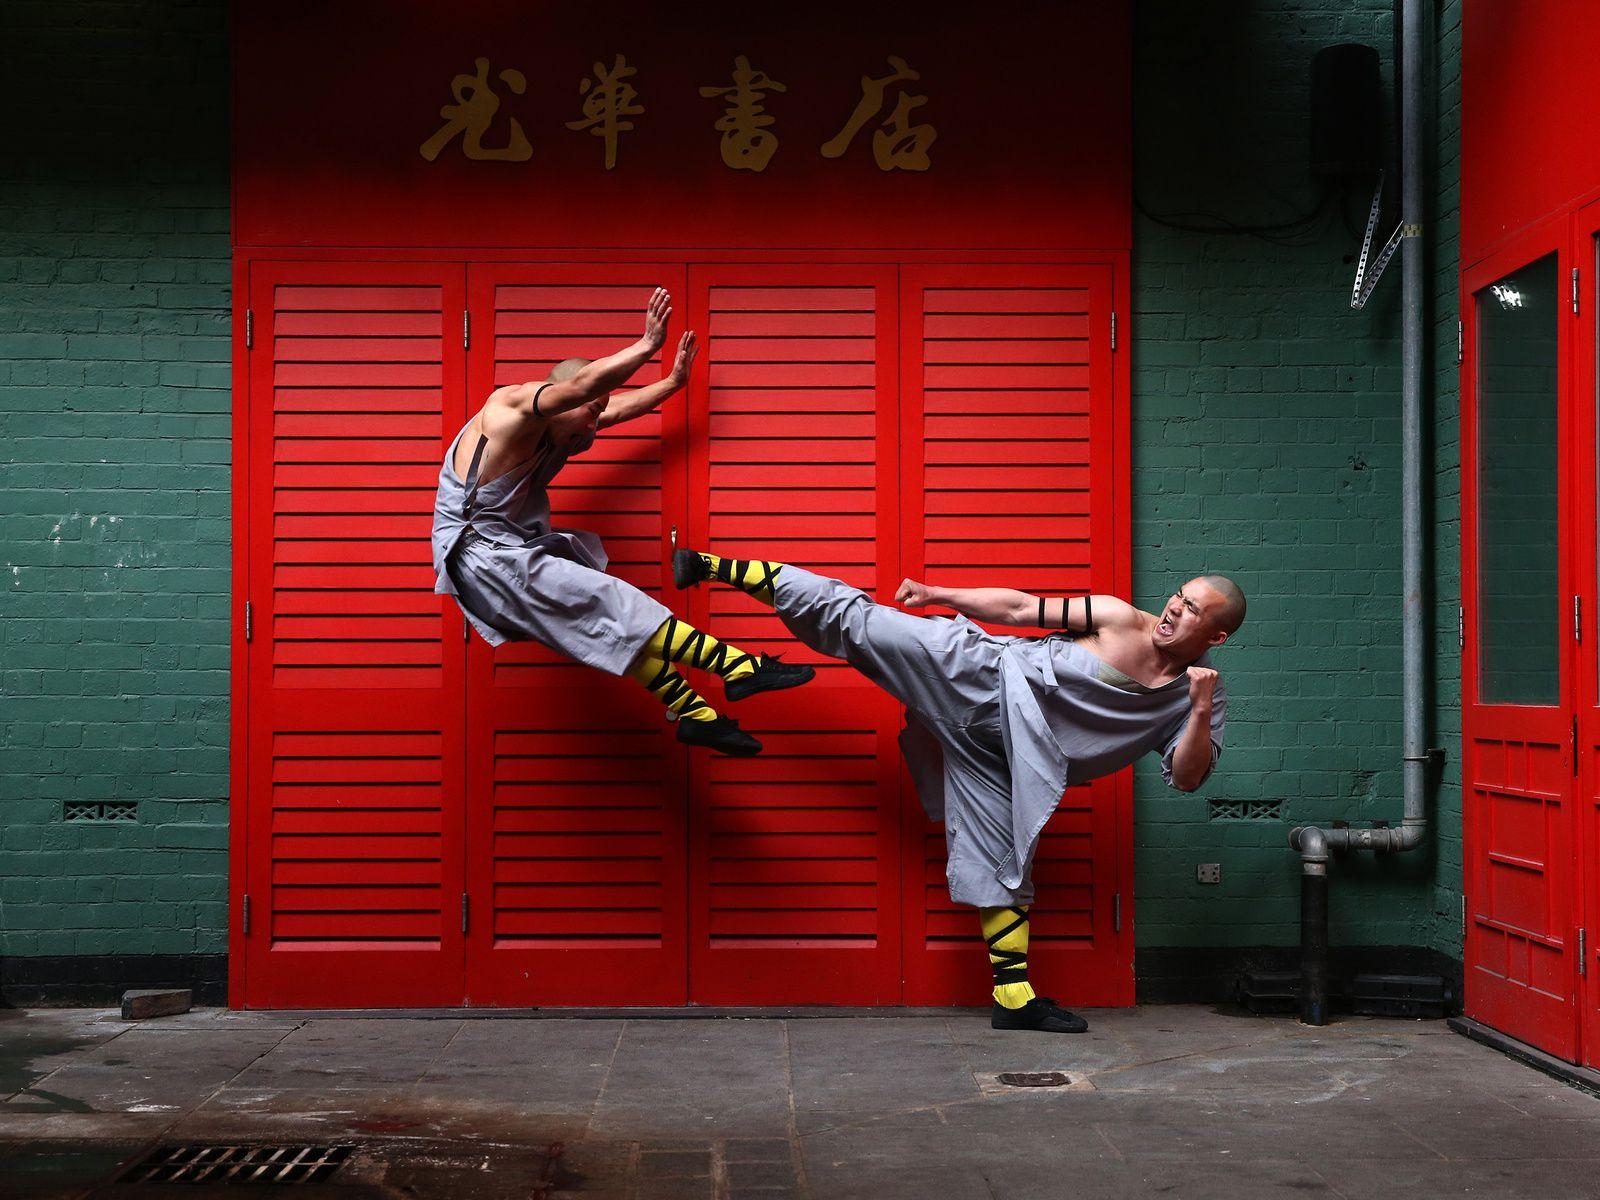 Shaolin Wallpaper, HDQ Cover Desktop Image. Desktop Screens